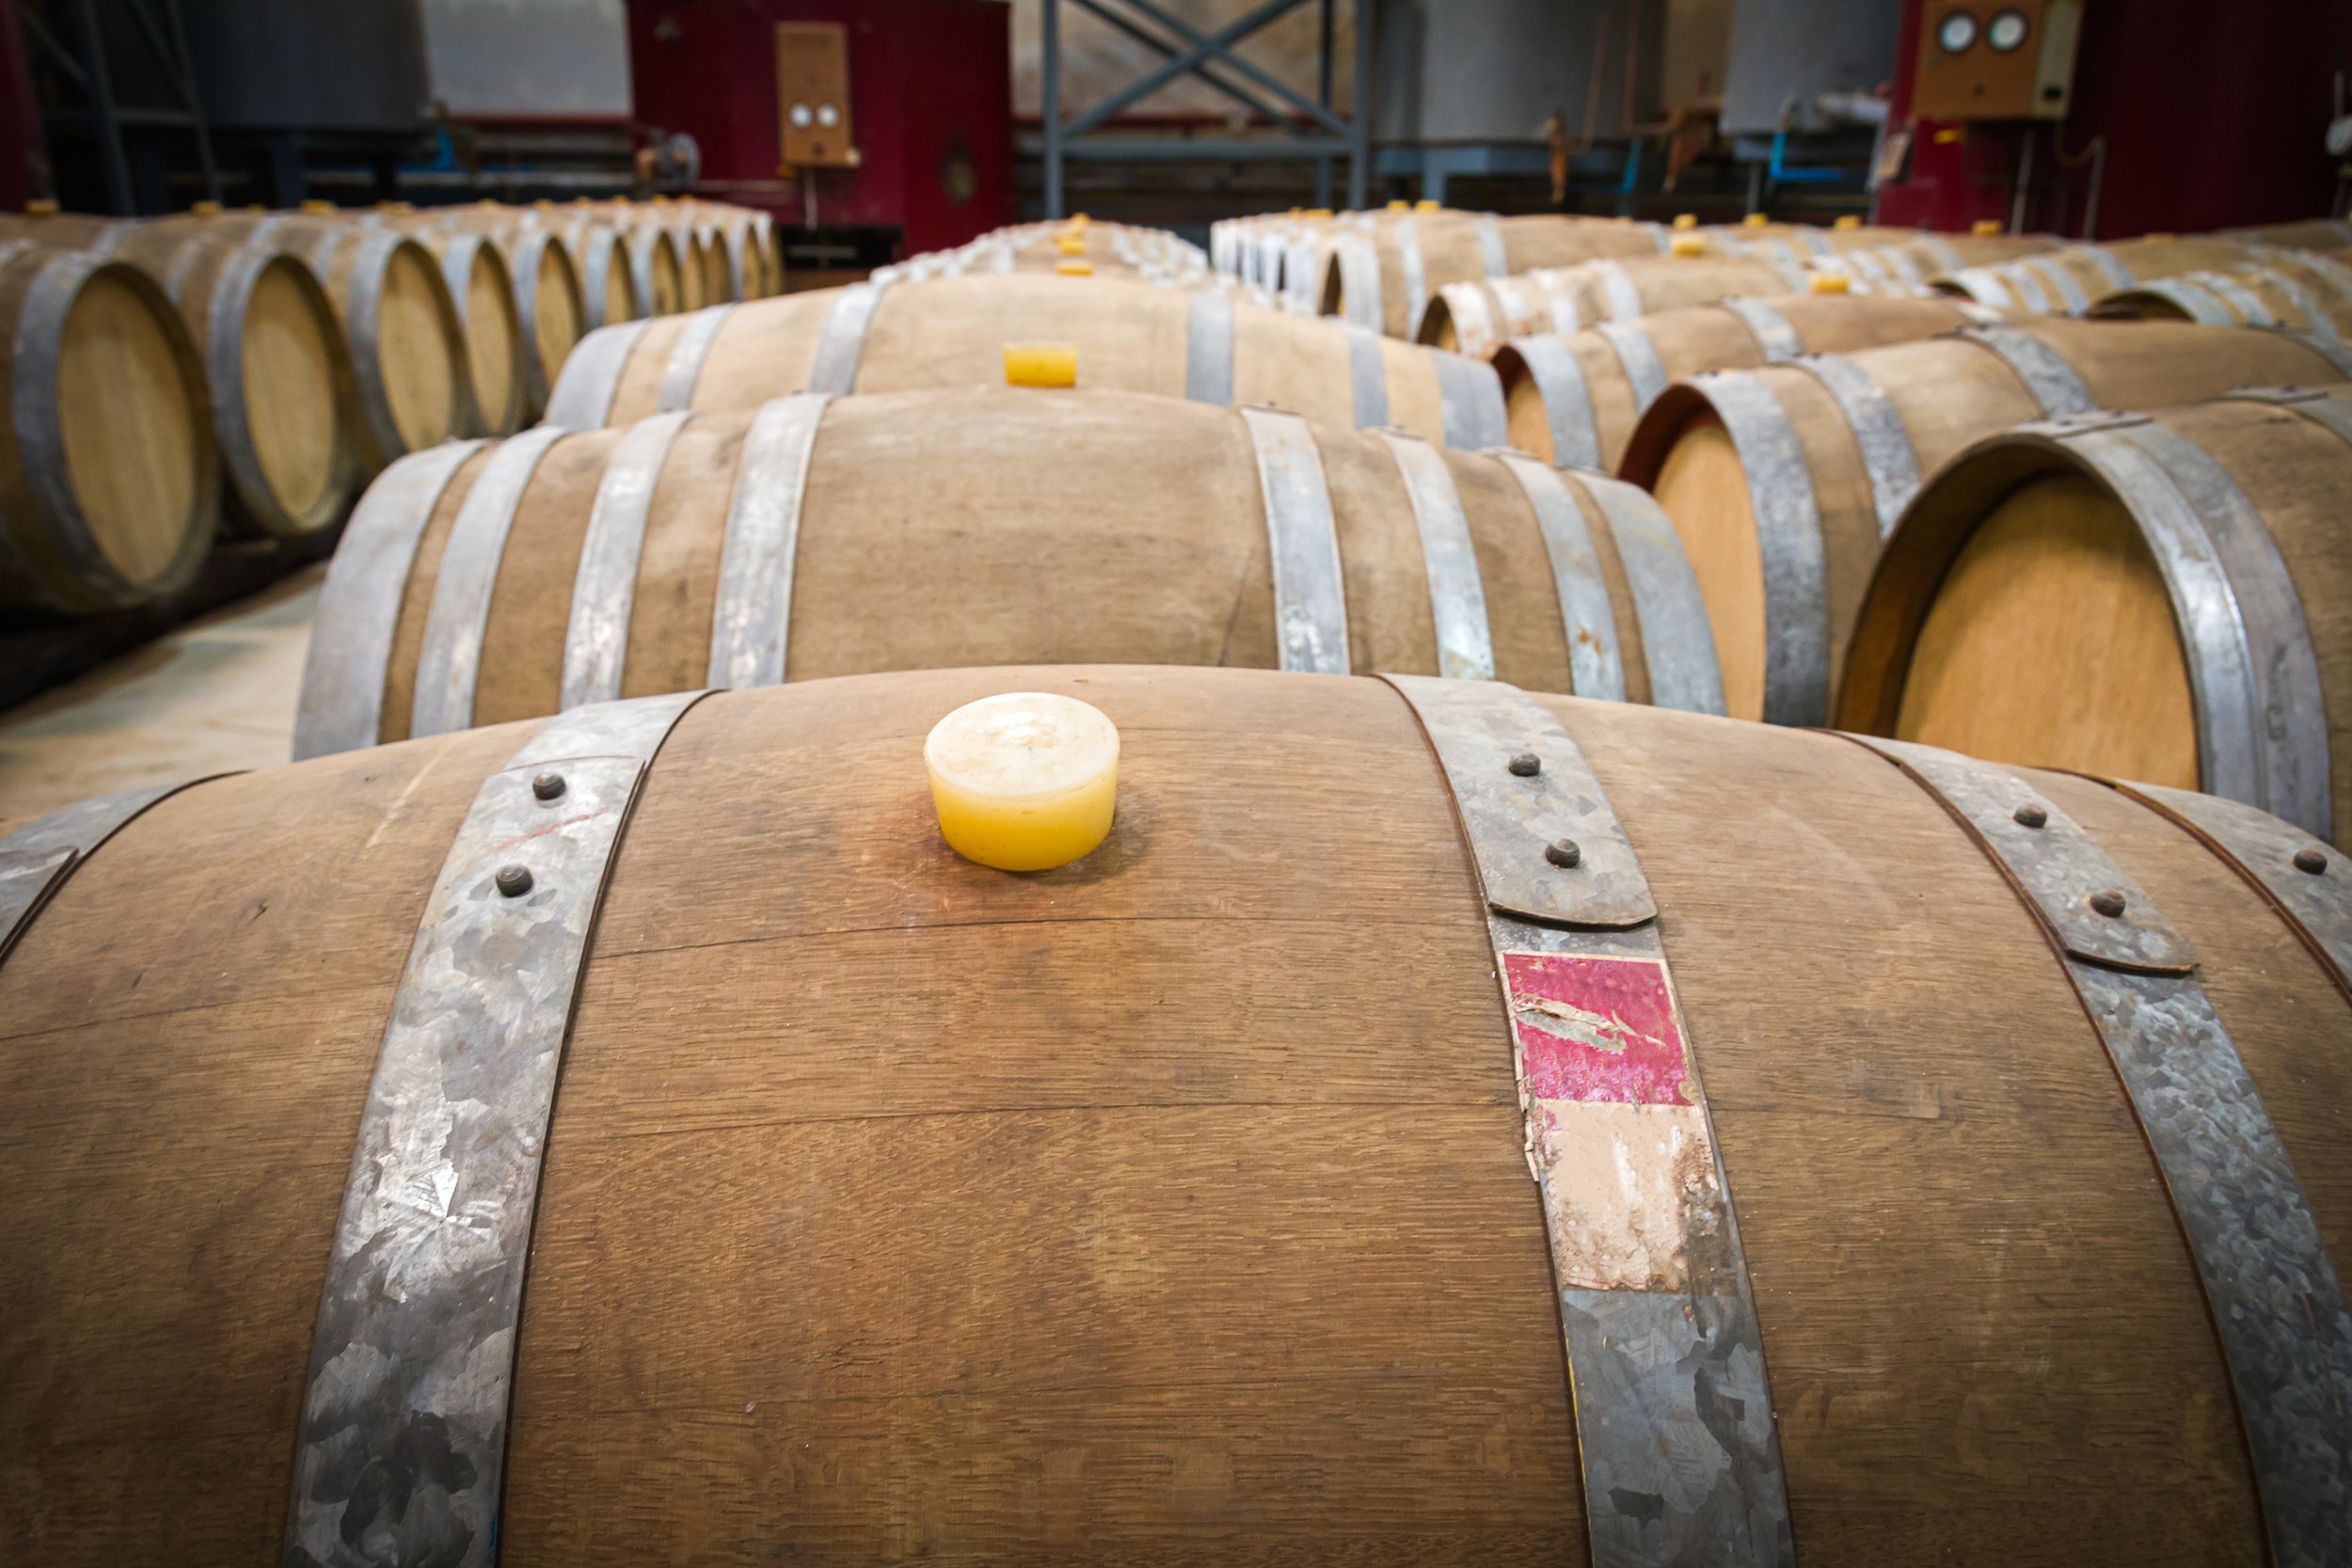 wine-barrels-in-the-cellar-of-the-winery-2021-08-26-17-19-37-utc.jpg